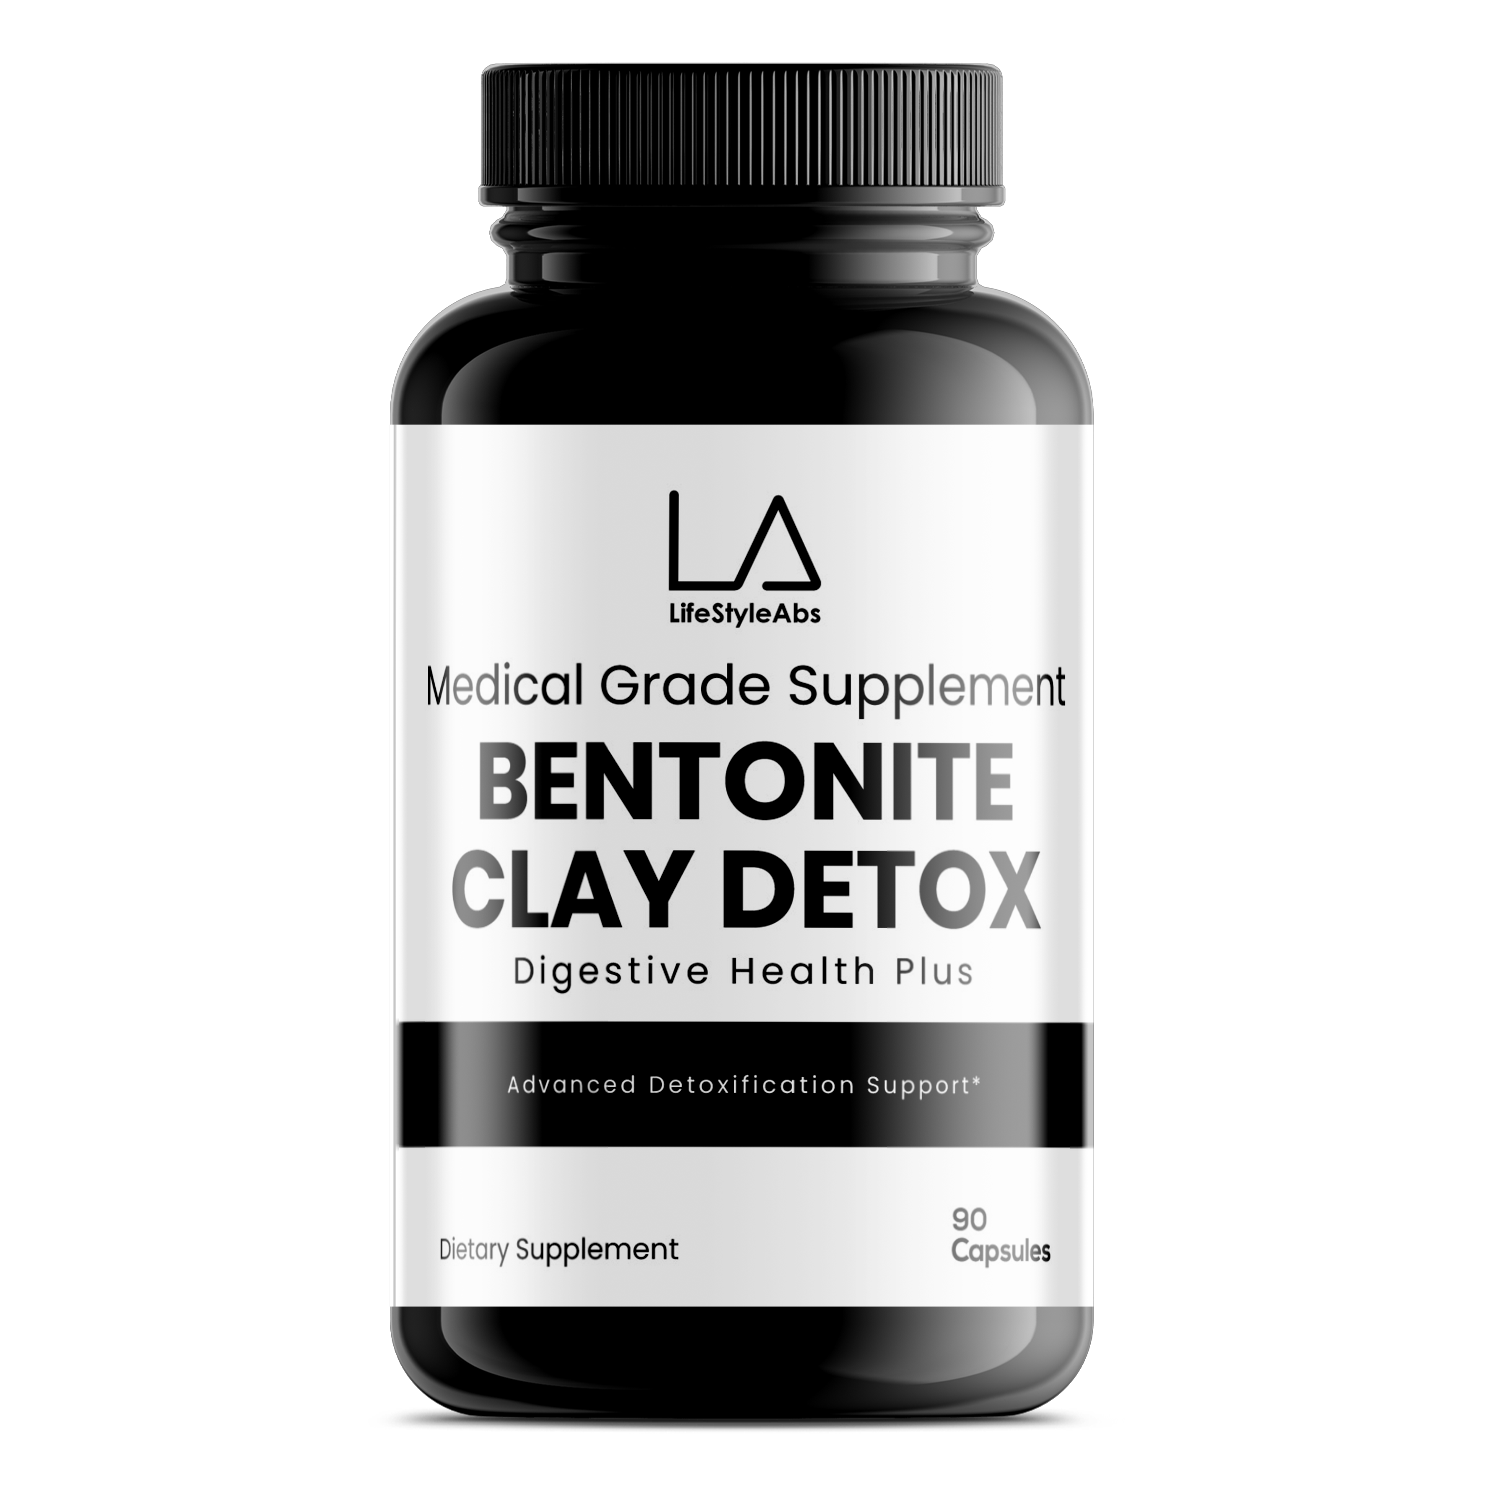 Bentonite Clay Detox